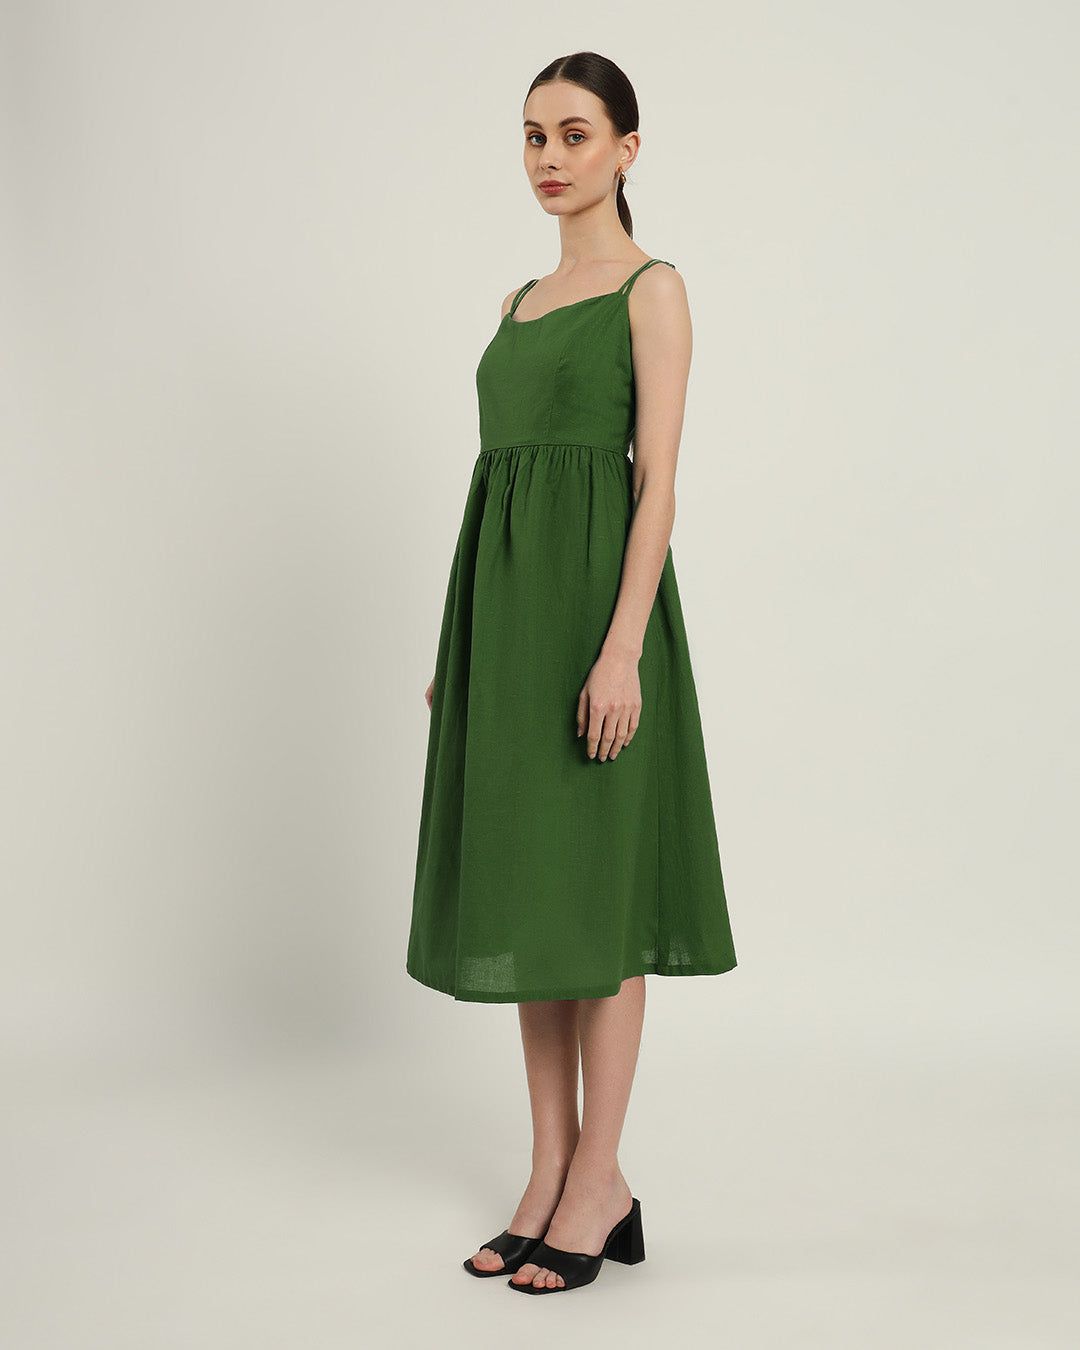 The Haiti Emerald Cotton Dress